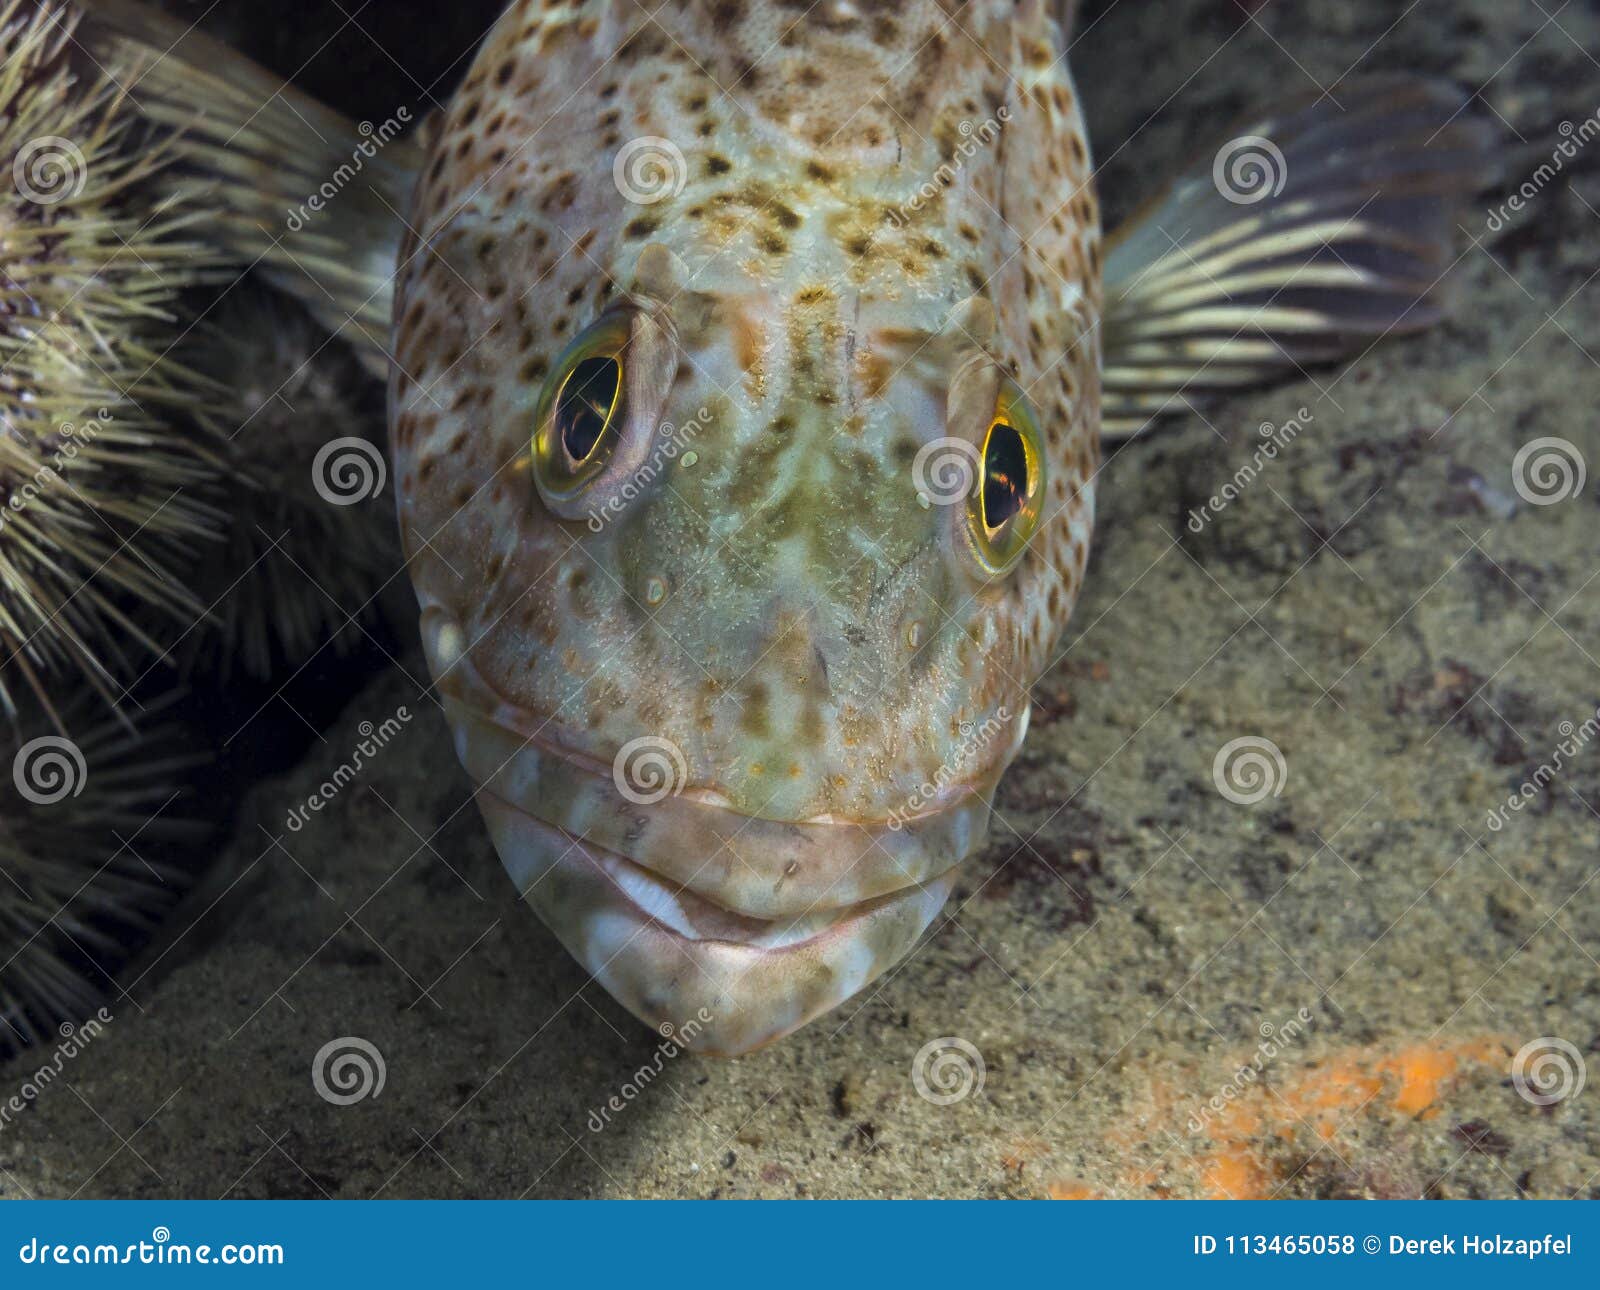 juvenile ling cod head ophiodon elongatus